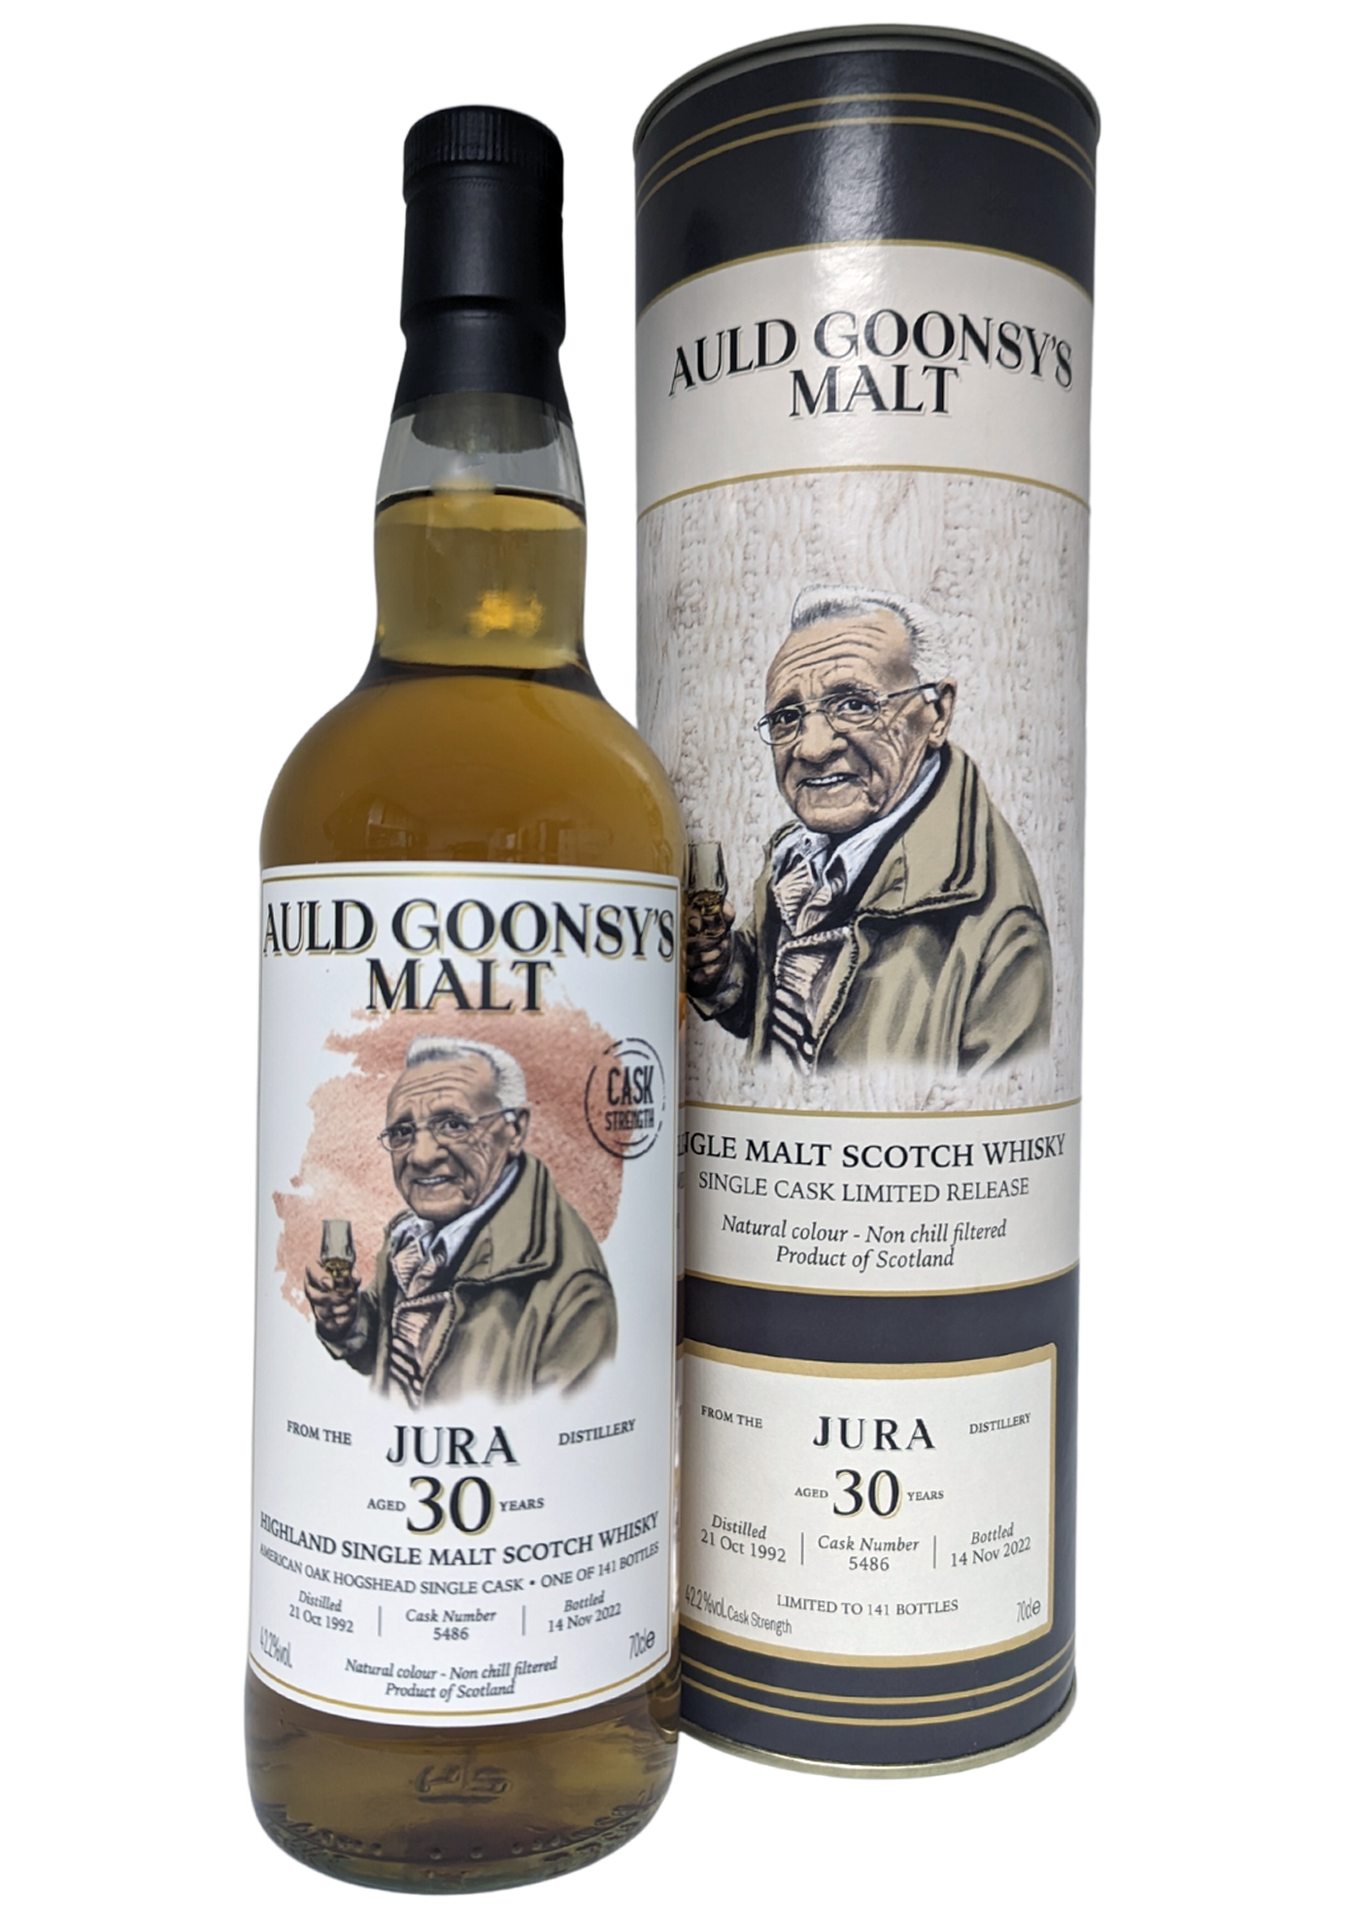 Auld Goonsy’s Malt